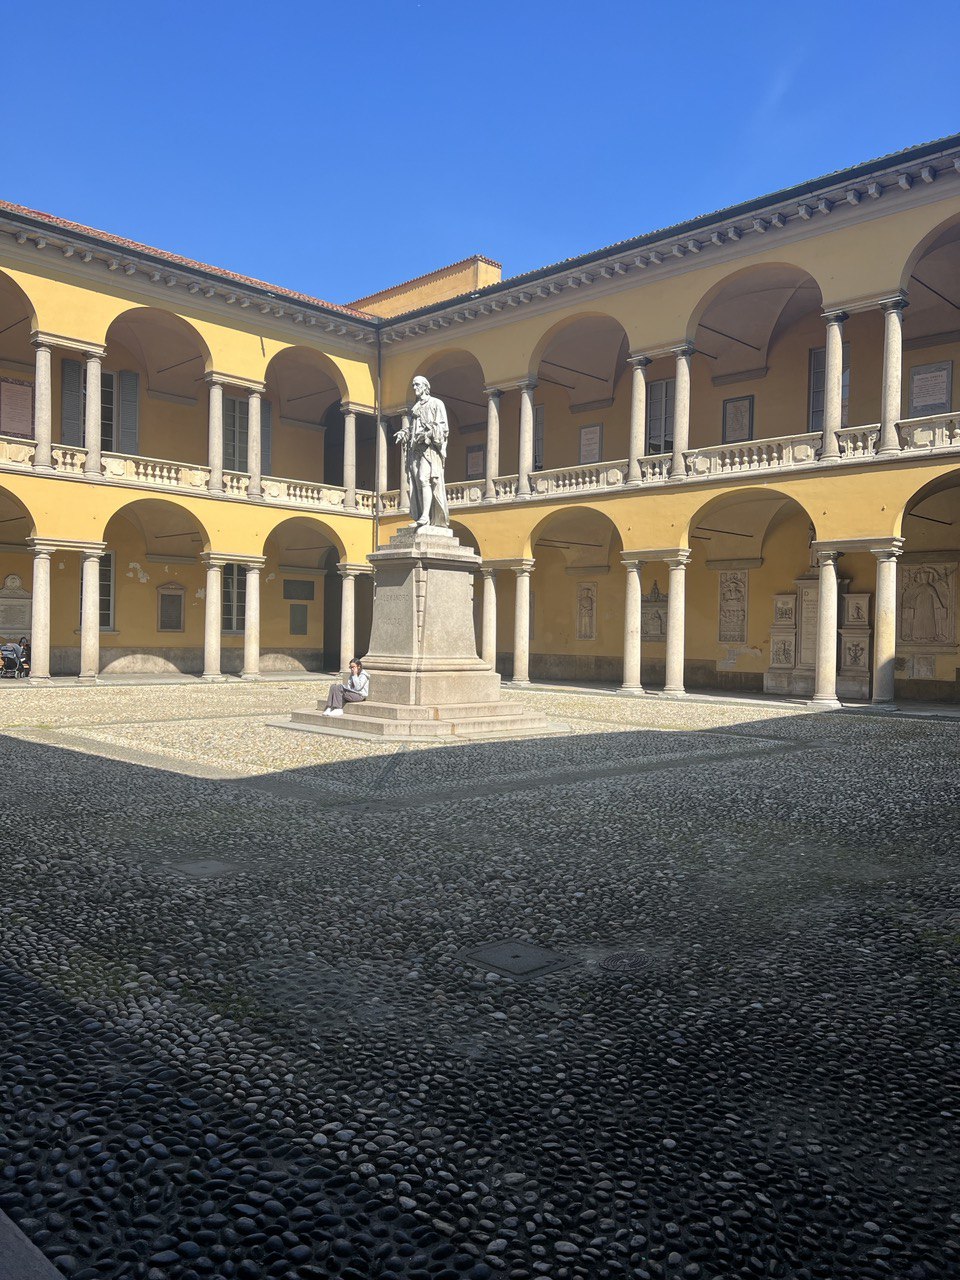 The University of Pavia